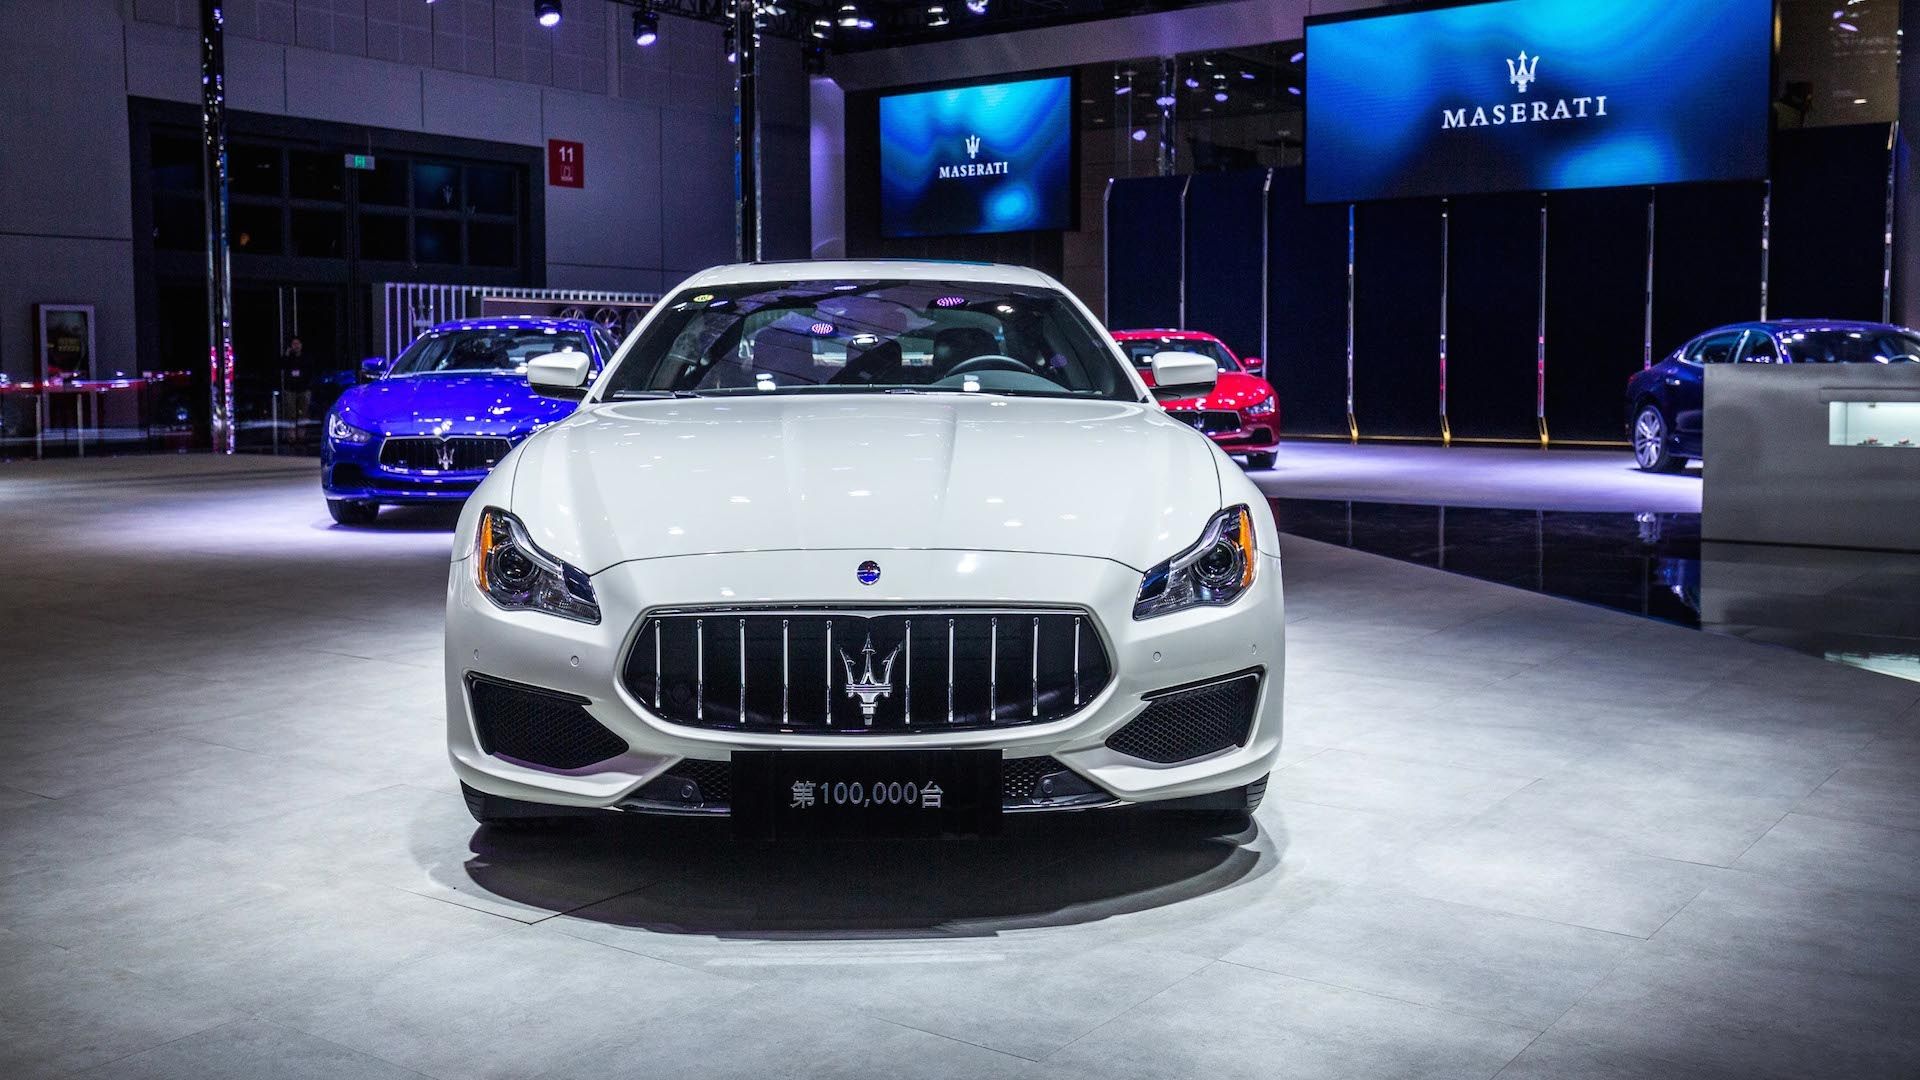 Maserati celebrated the milestone delivery of its 100,000th car